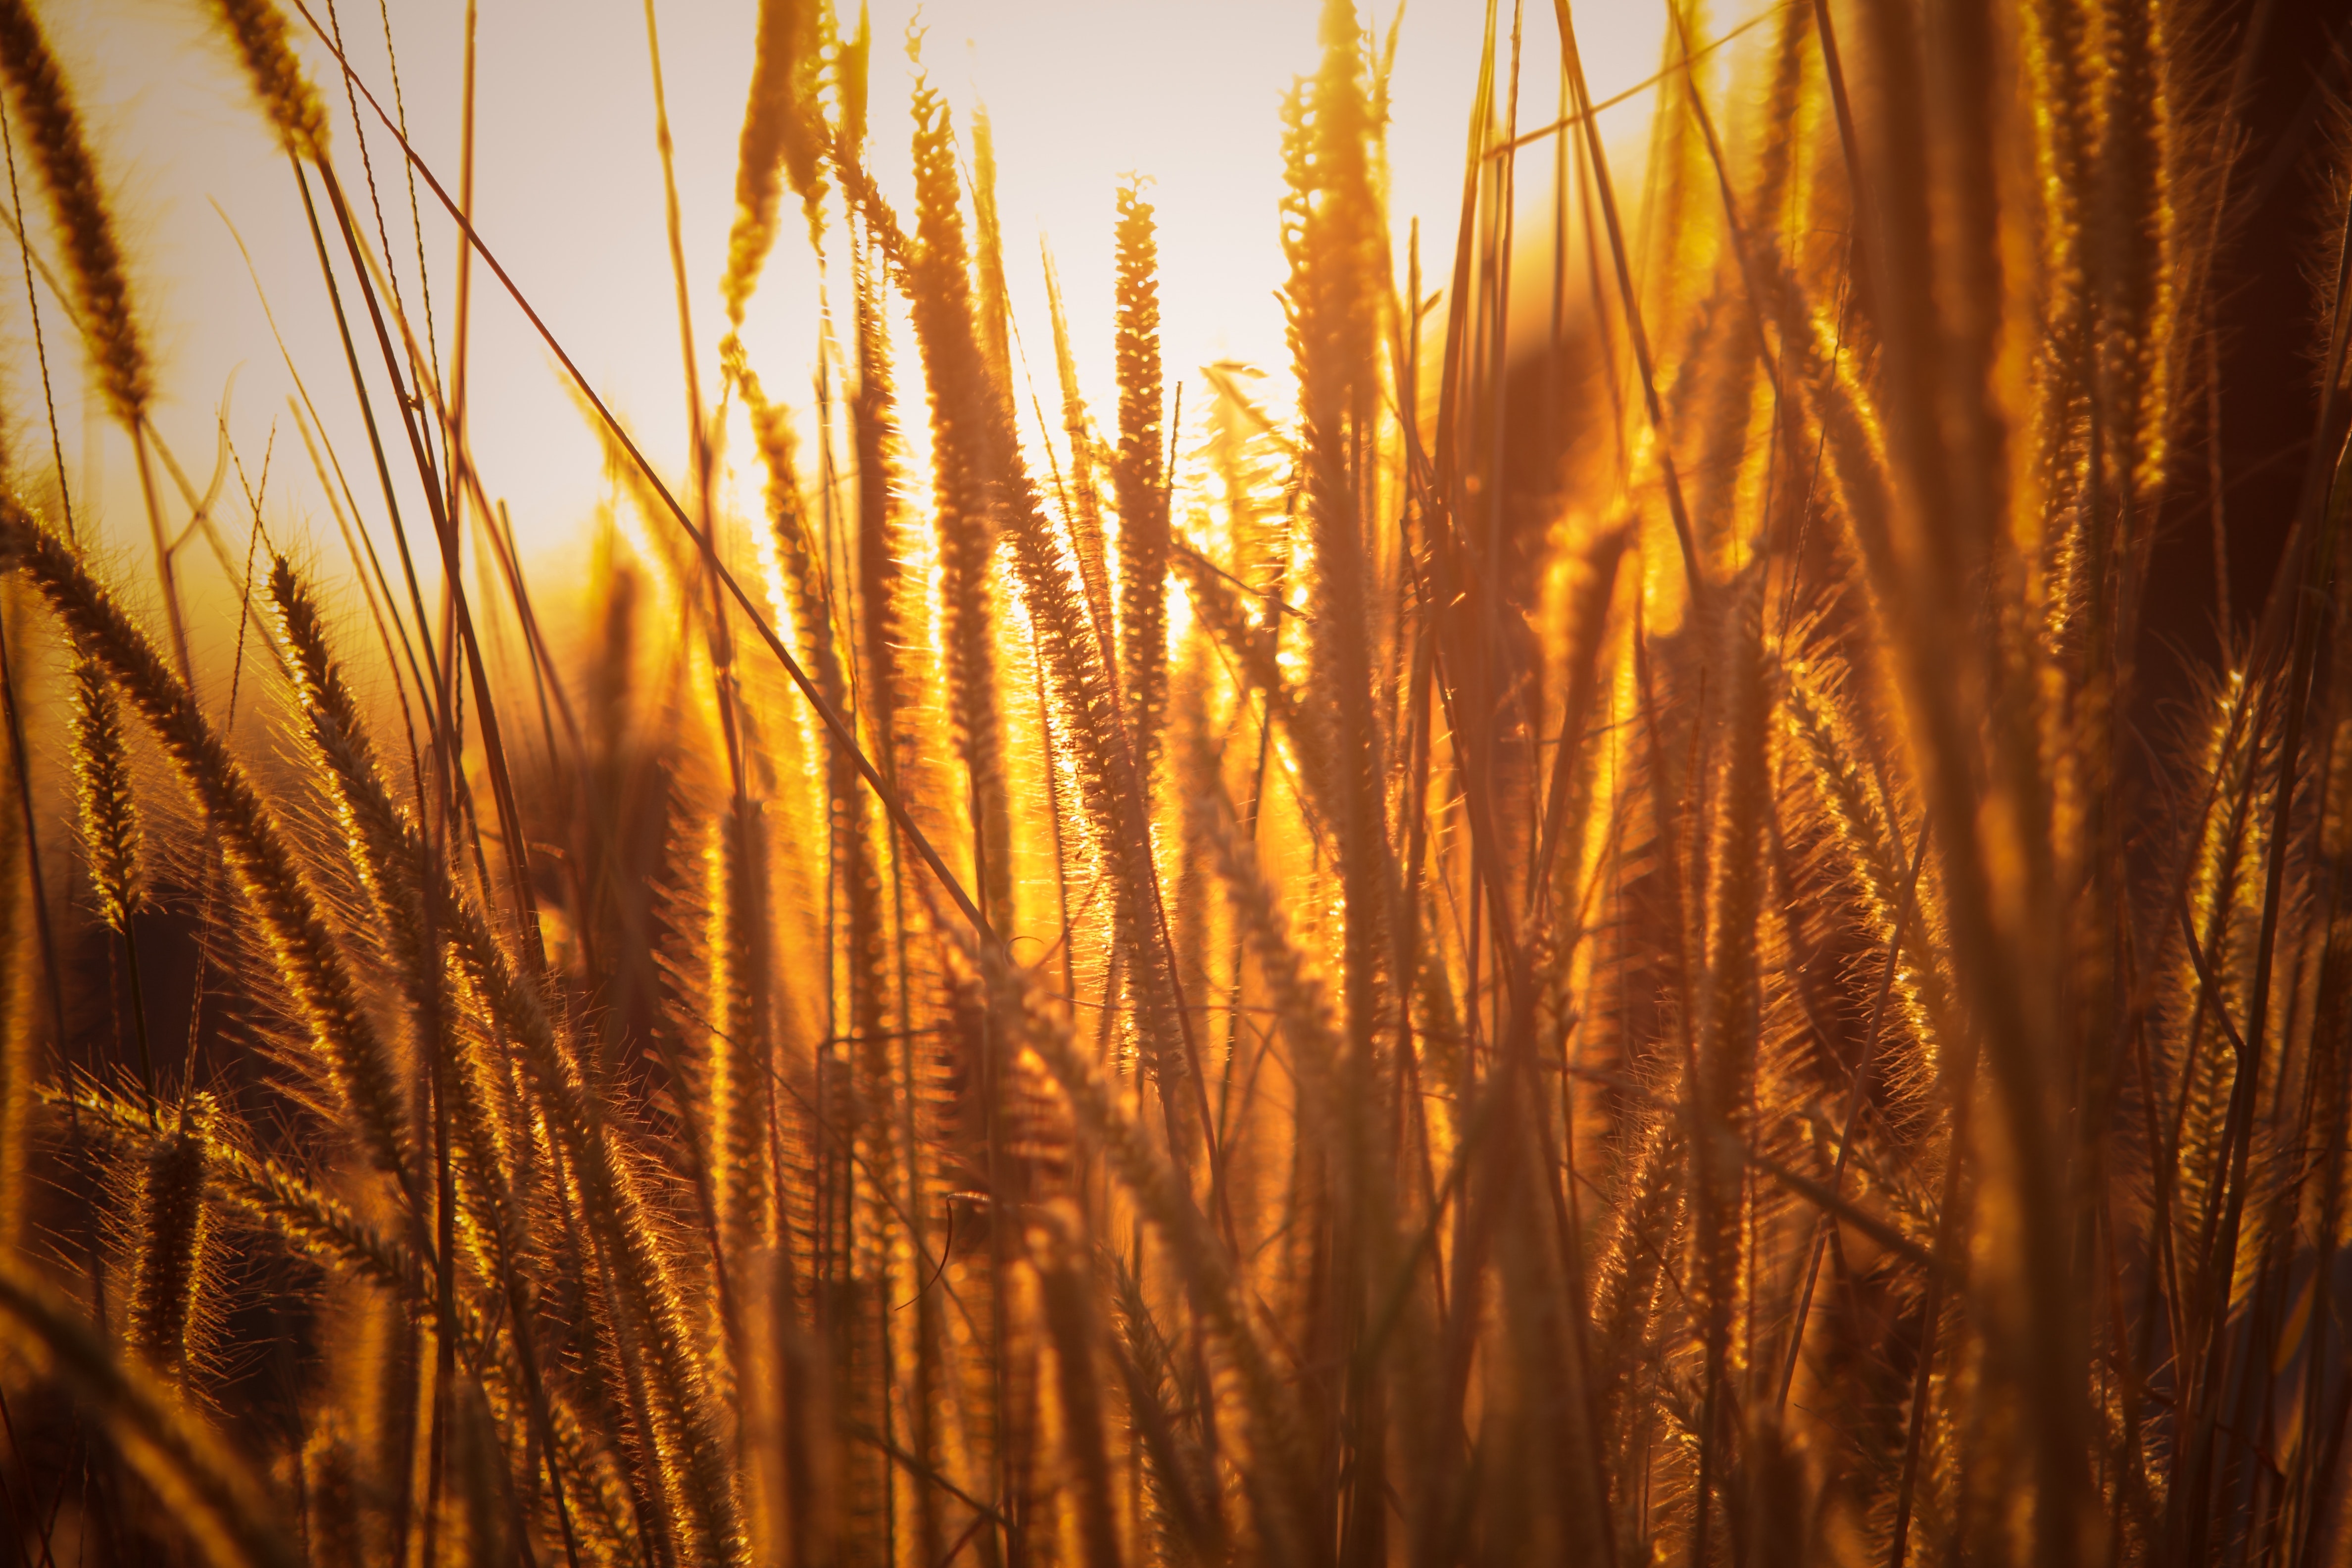 Brown rice wheats photo